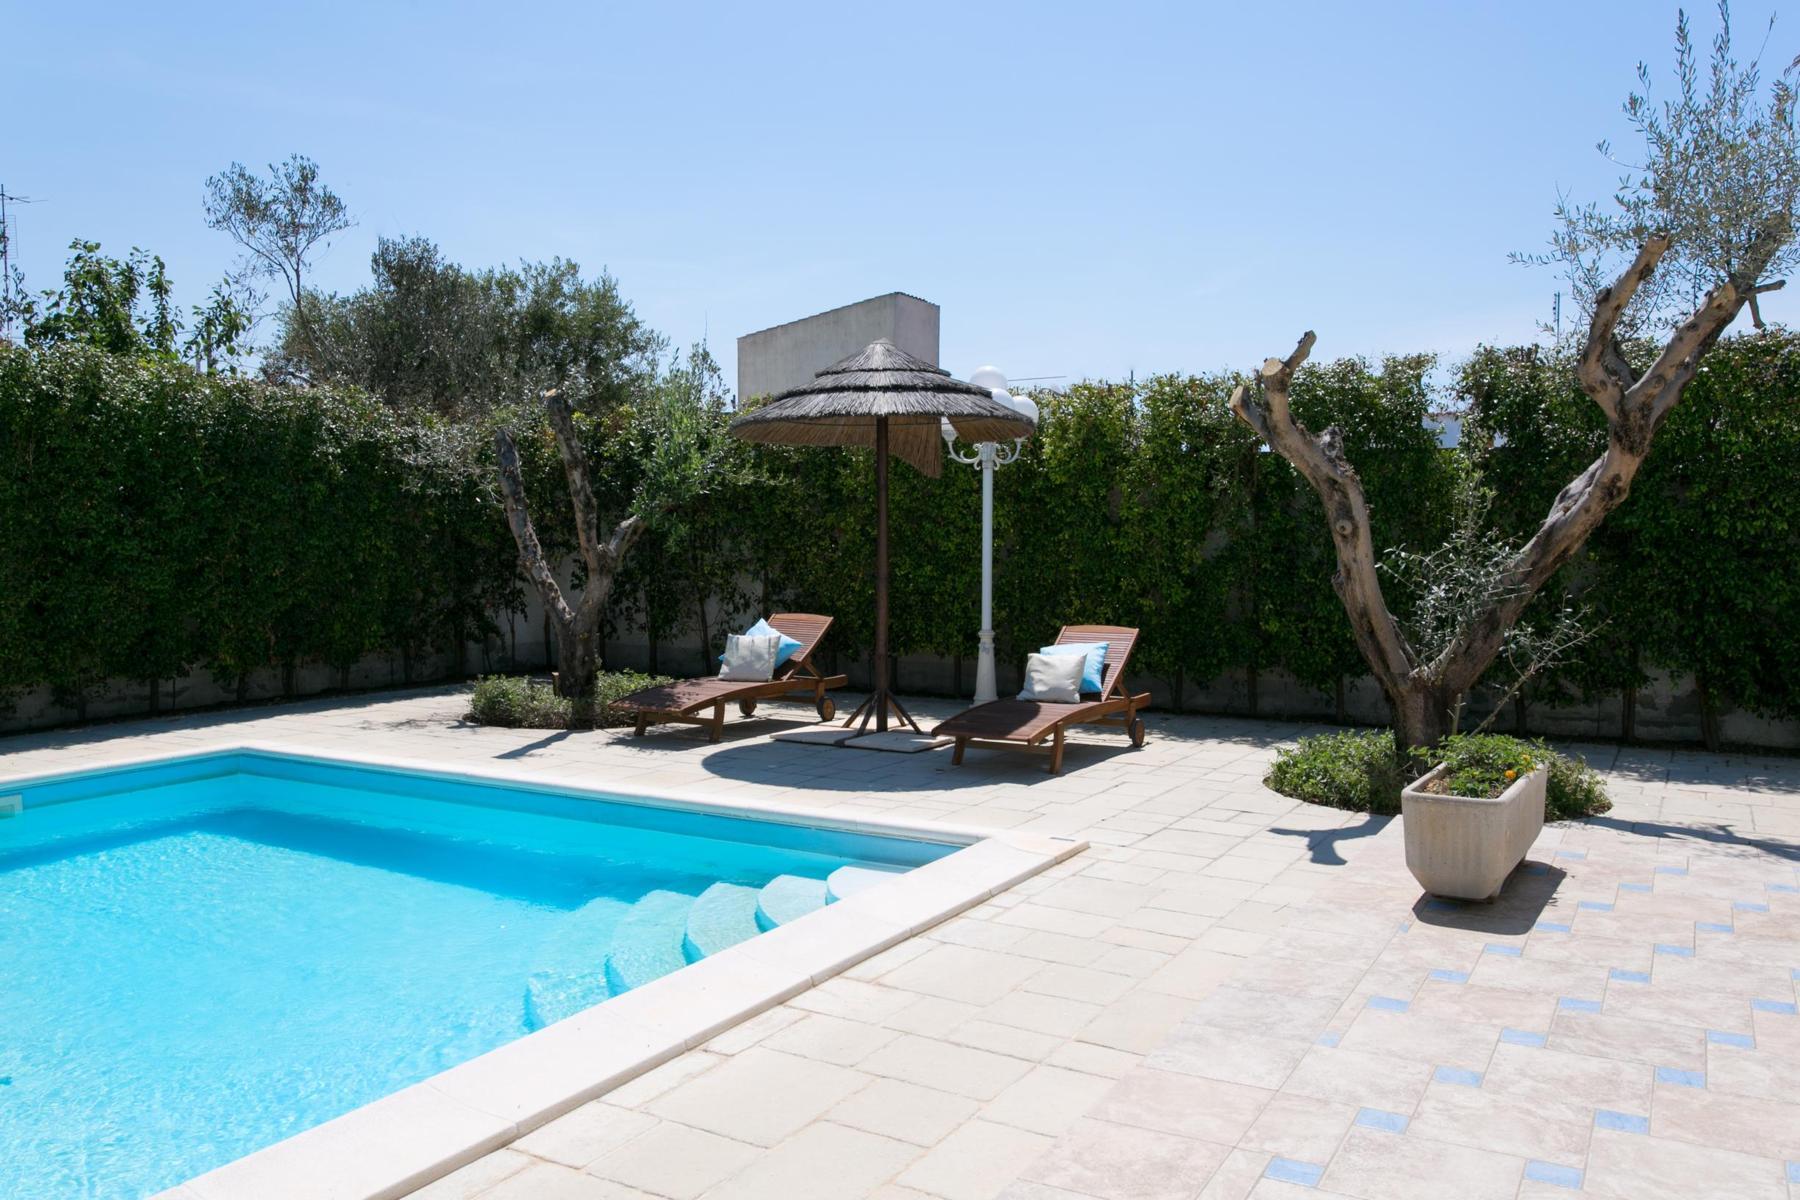 Villa Castore - Puglia Holiday Villa For Rent With Pool - Aria Journeys